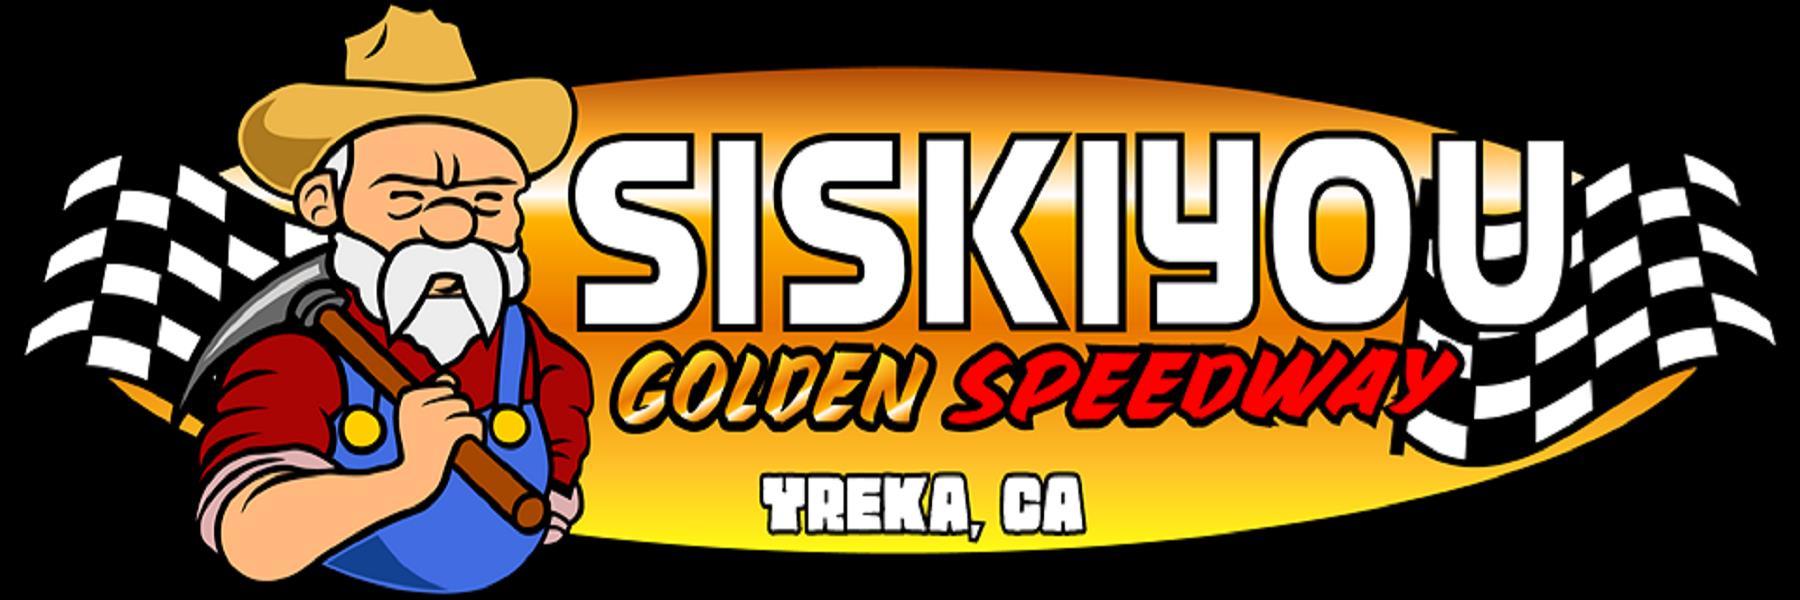 4/3/2021 - Siskiyou Golden Speedway